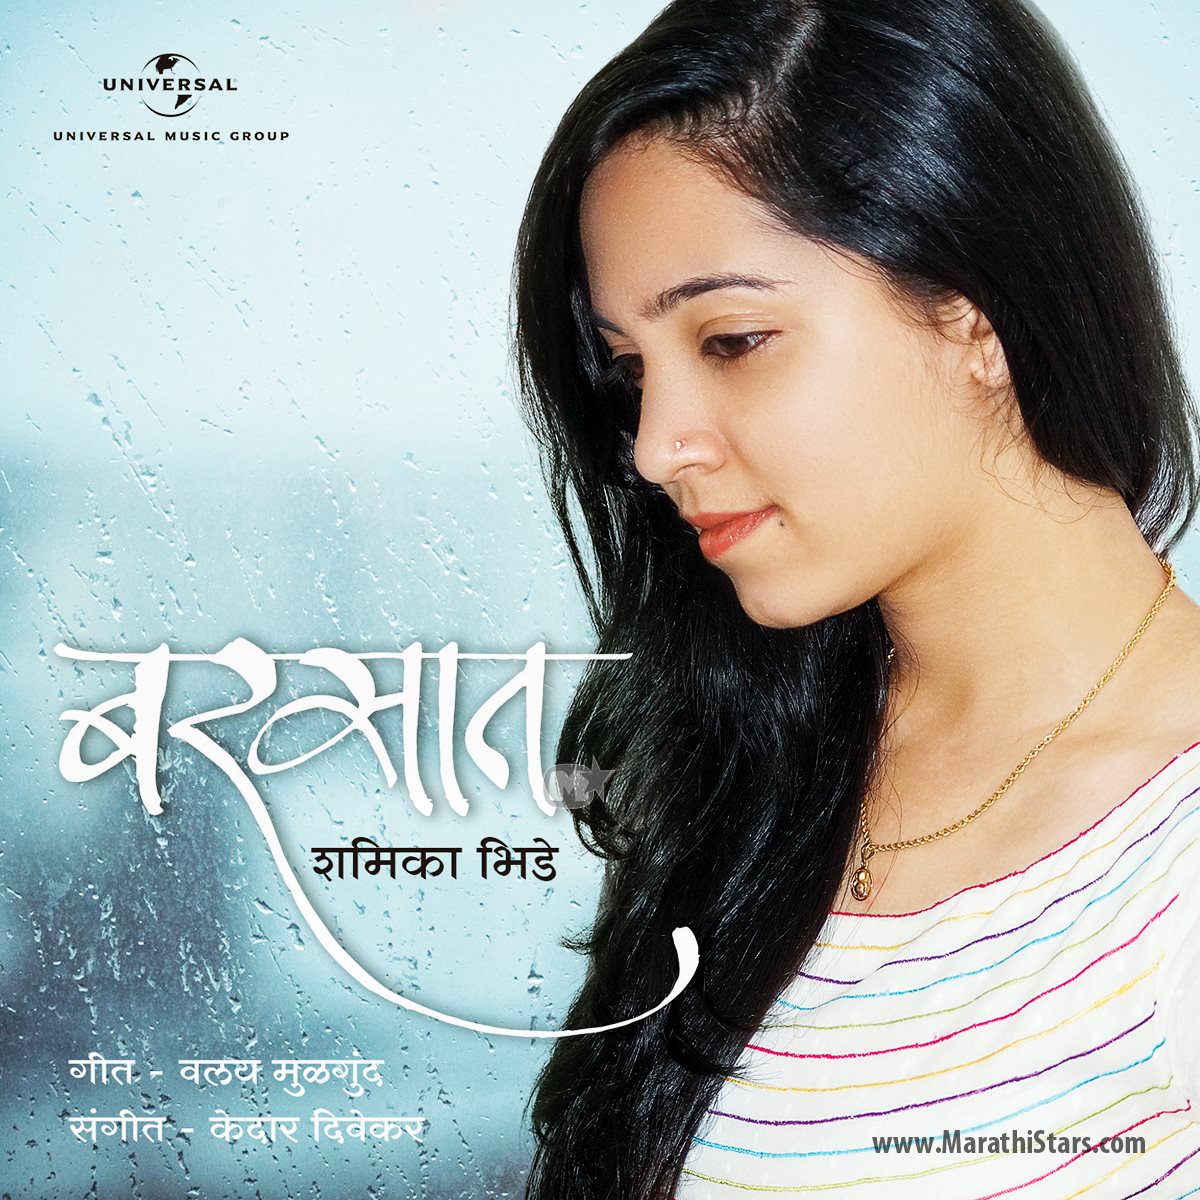 barsaat hindi movie mp3 songs free download pk